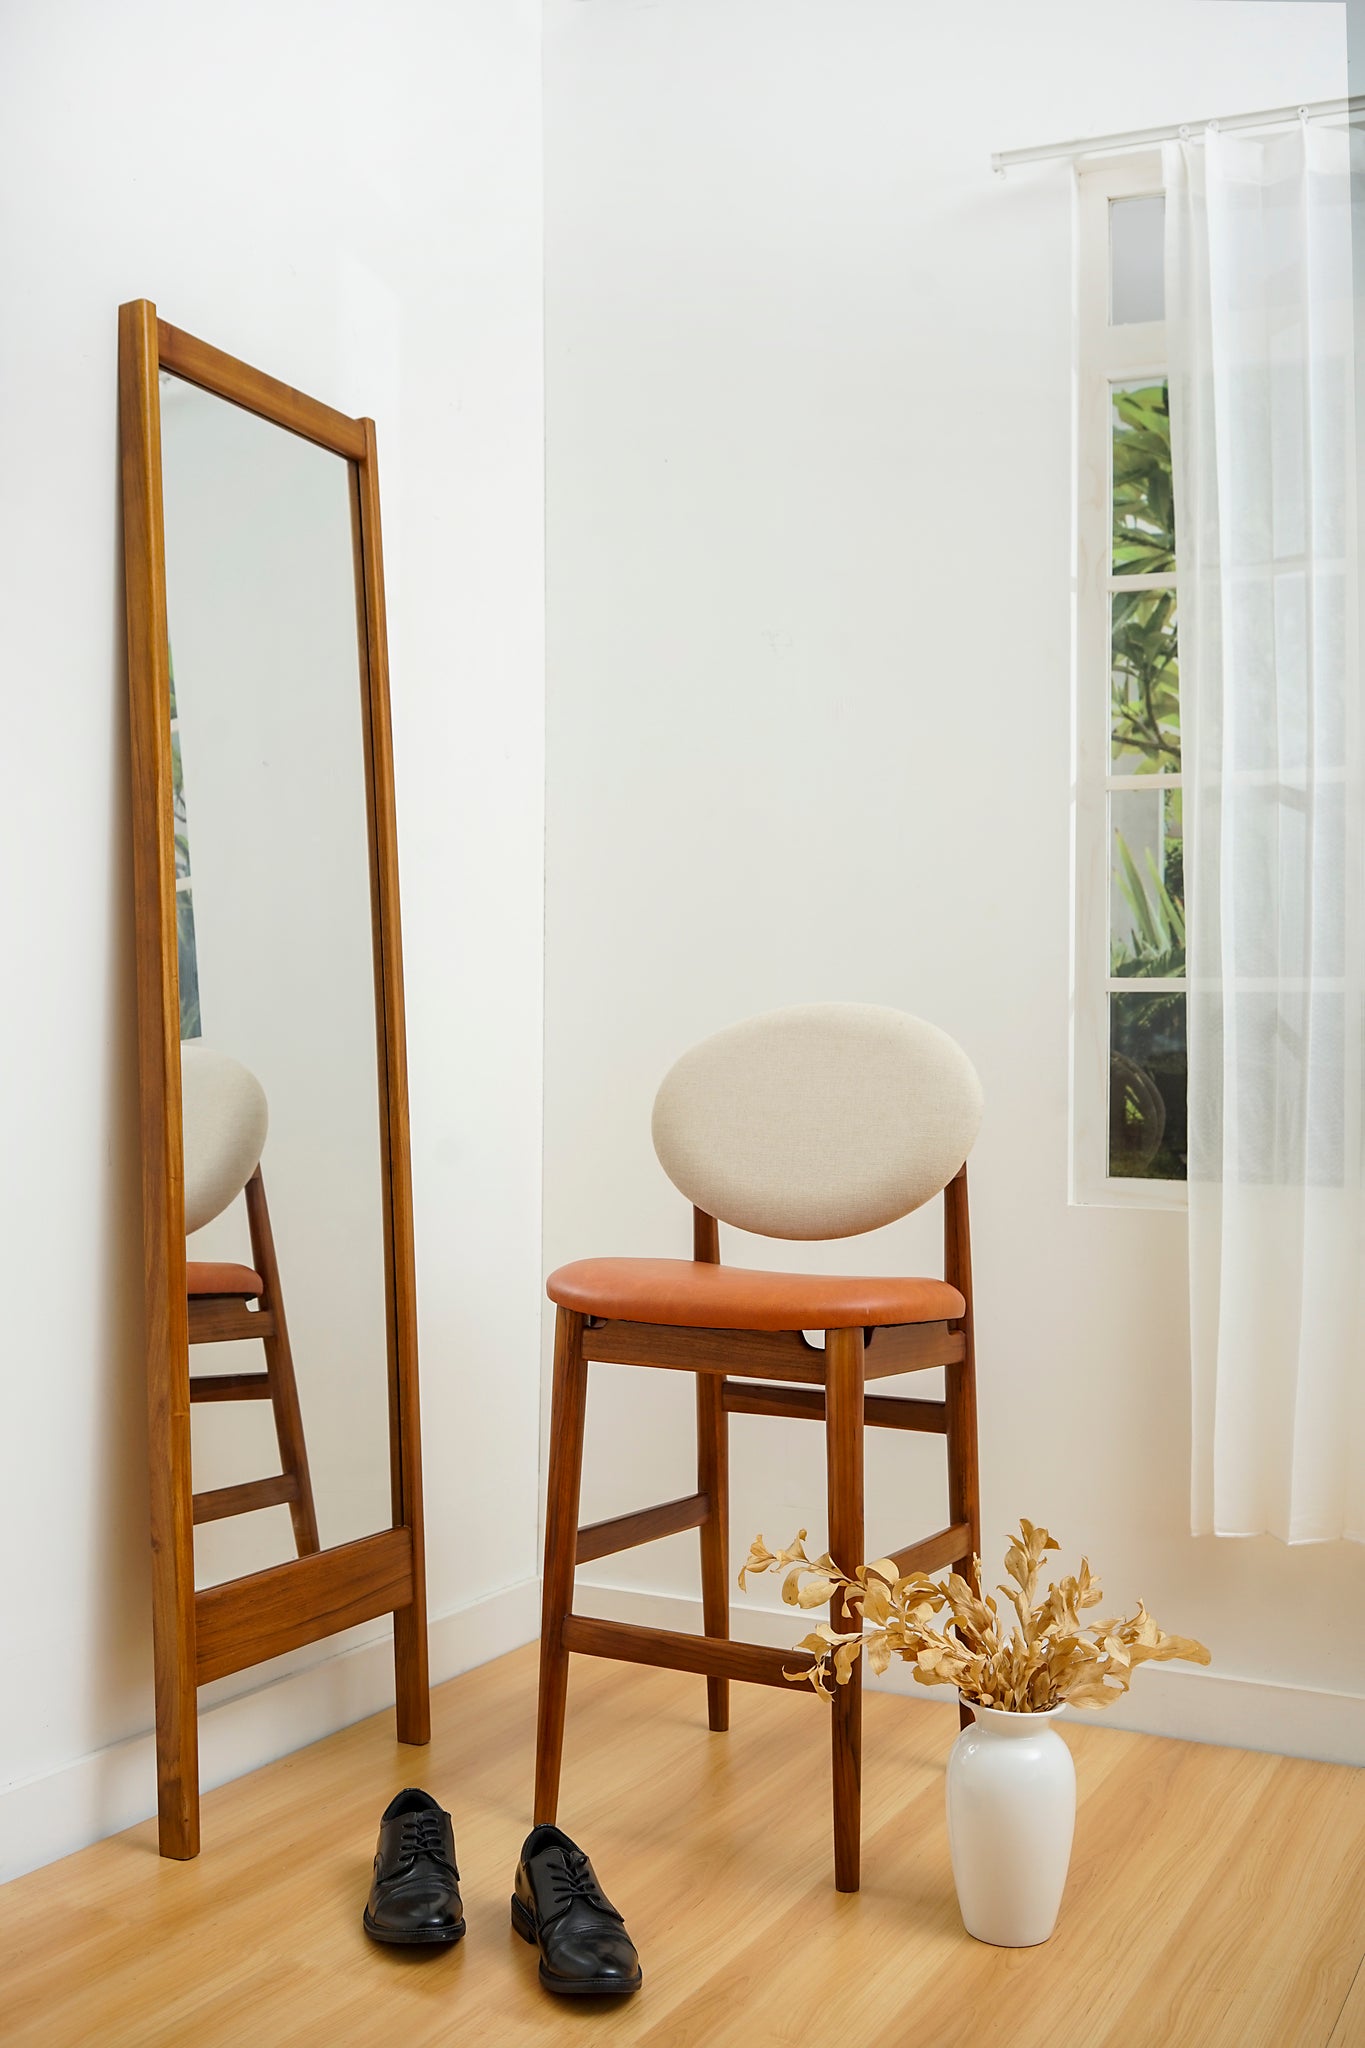 Cermin Tinggi Full Body Freestanding - Tinggi 183 cm Mirror Lagom Home Store Jati Furnitur Teak Furniture Jakarta